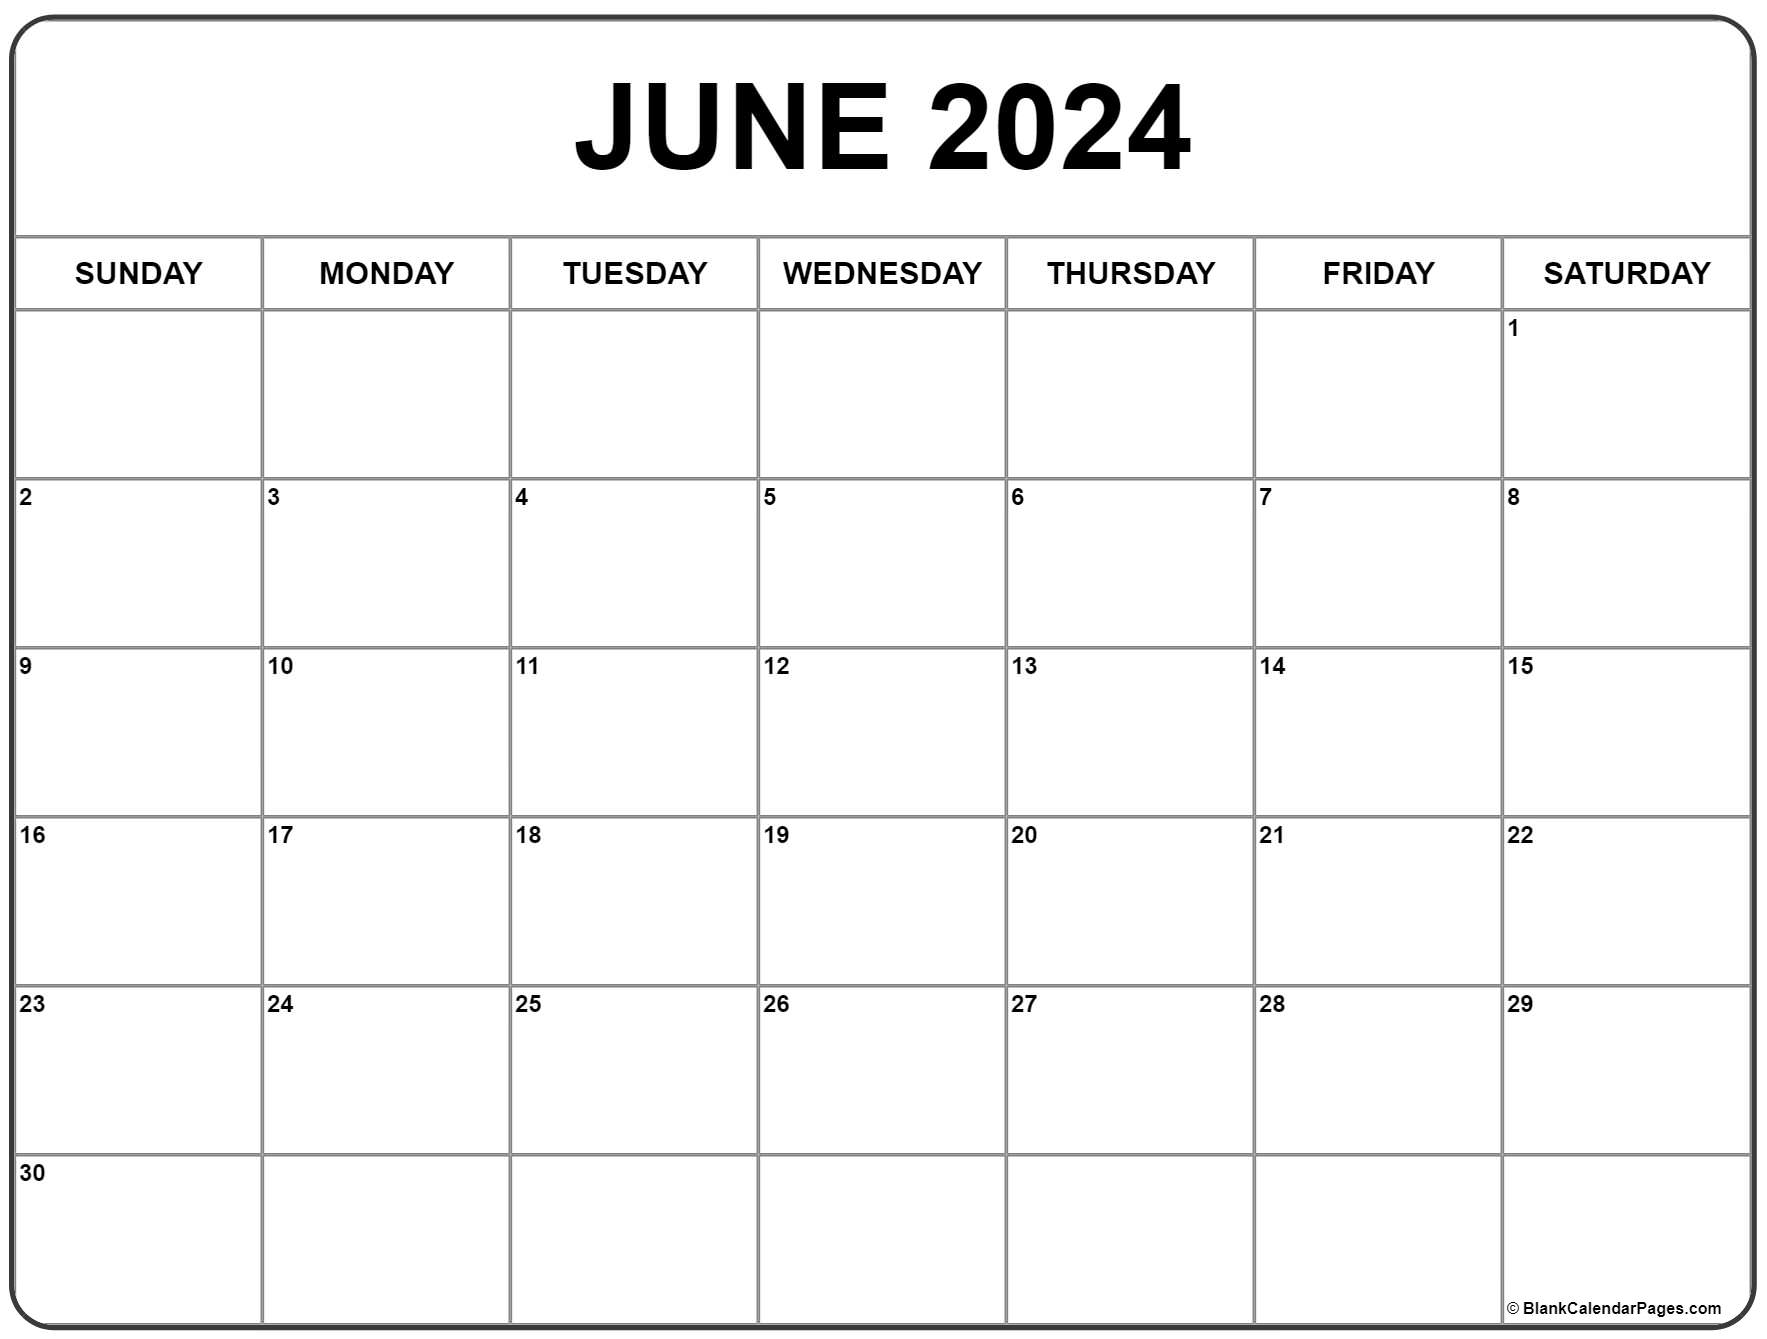 June 2024 Calendar | Free Printable Calendar for Free June 2024 Calendar Printable